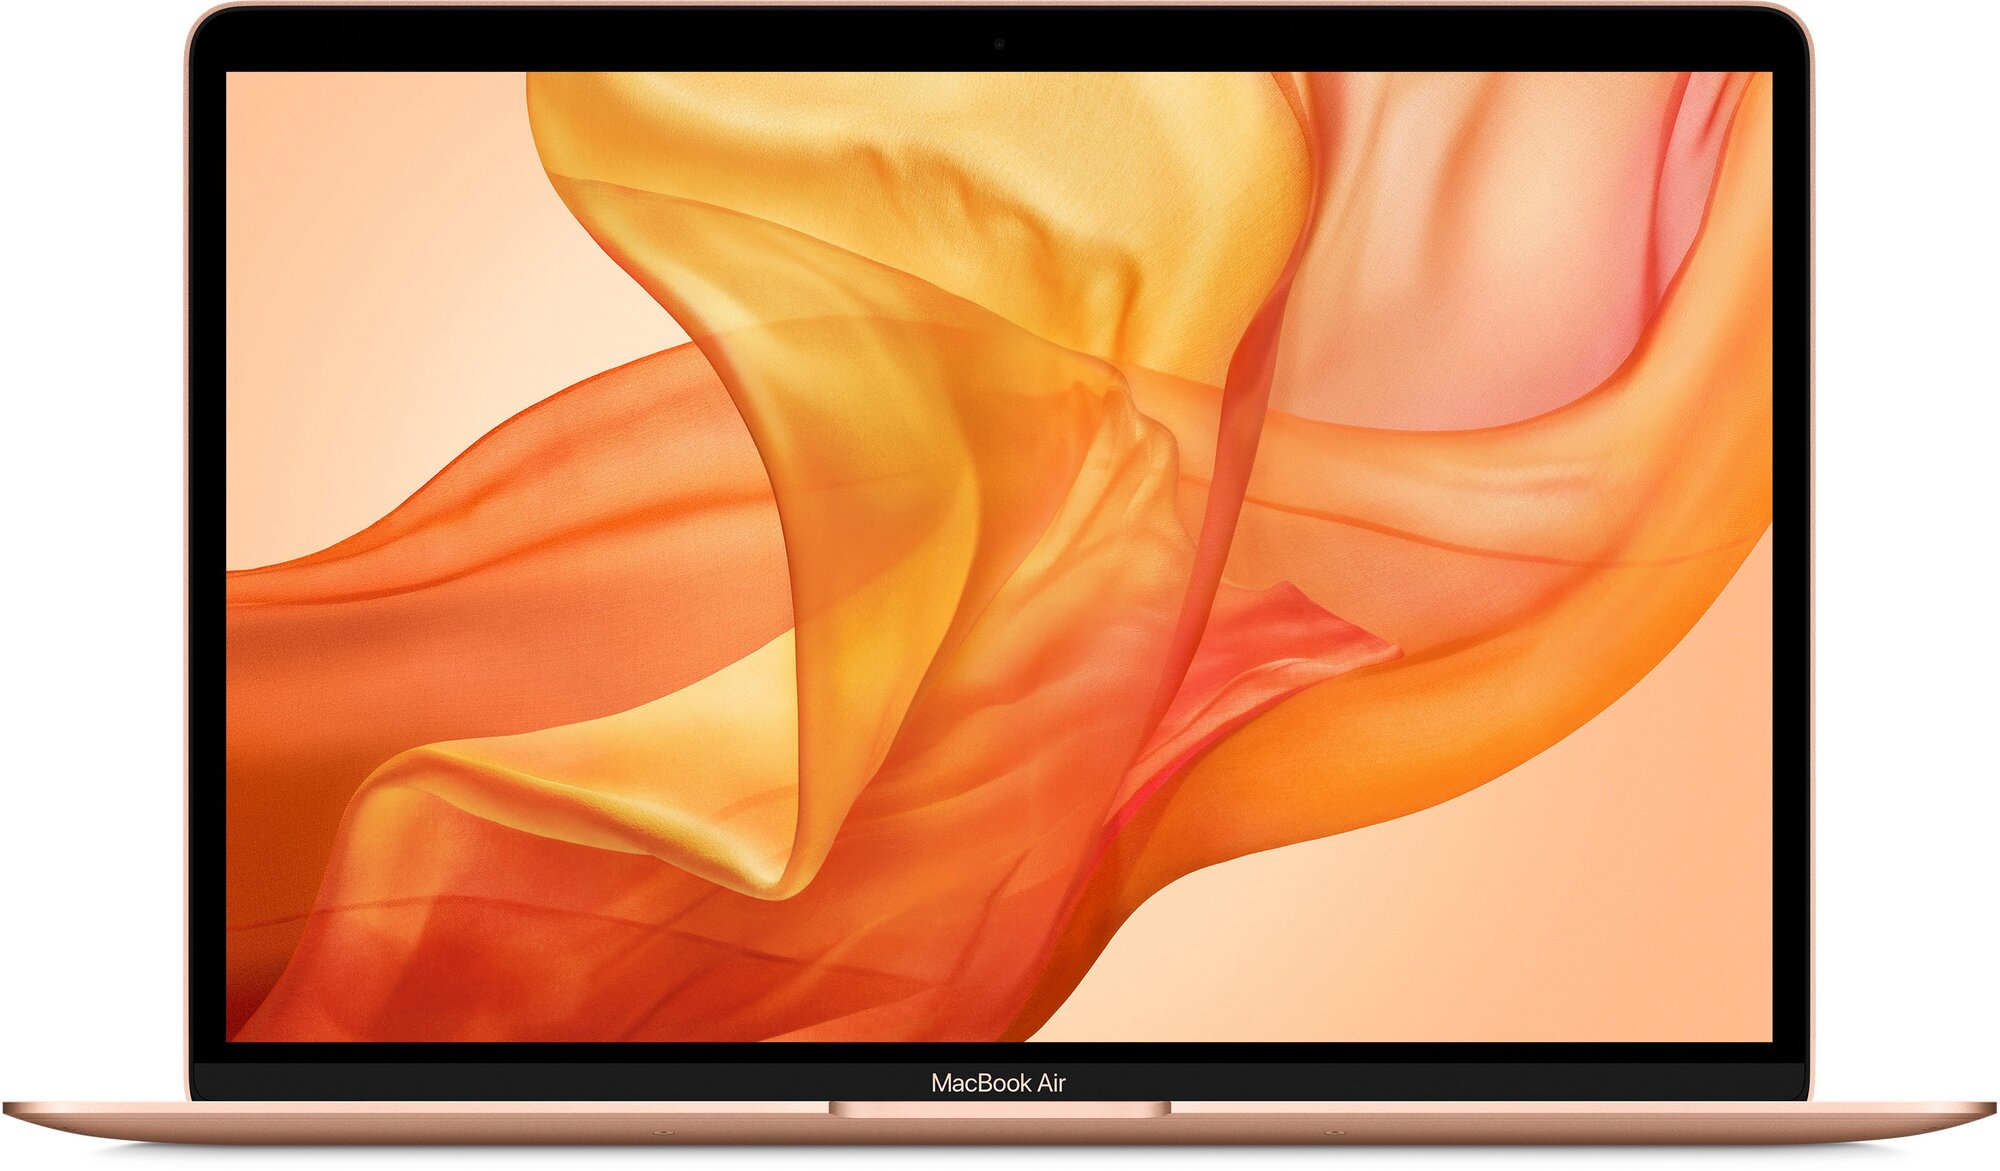 13.3" Ноутбук Apple MacBook Air 13 Mid 2019 Intel Core i5 8210Y 1.6 ГГц, RAM 8 ГБ, SSD 128 ГБ, Intel UHD Graphics 617, macOS, RU, MVFK2RU/A, золотой